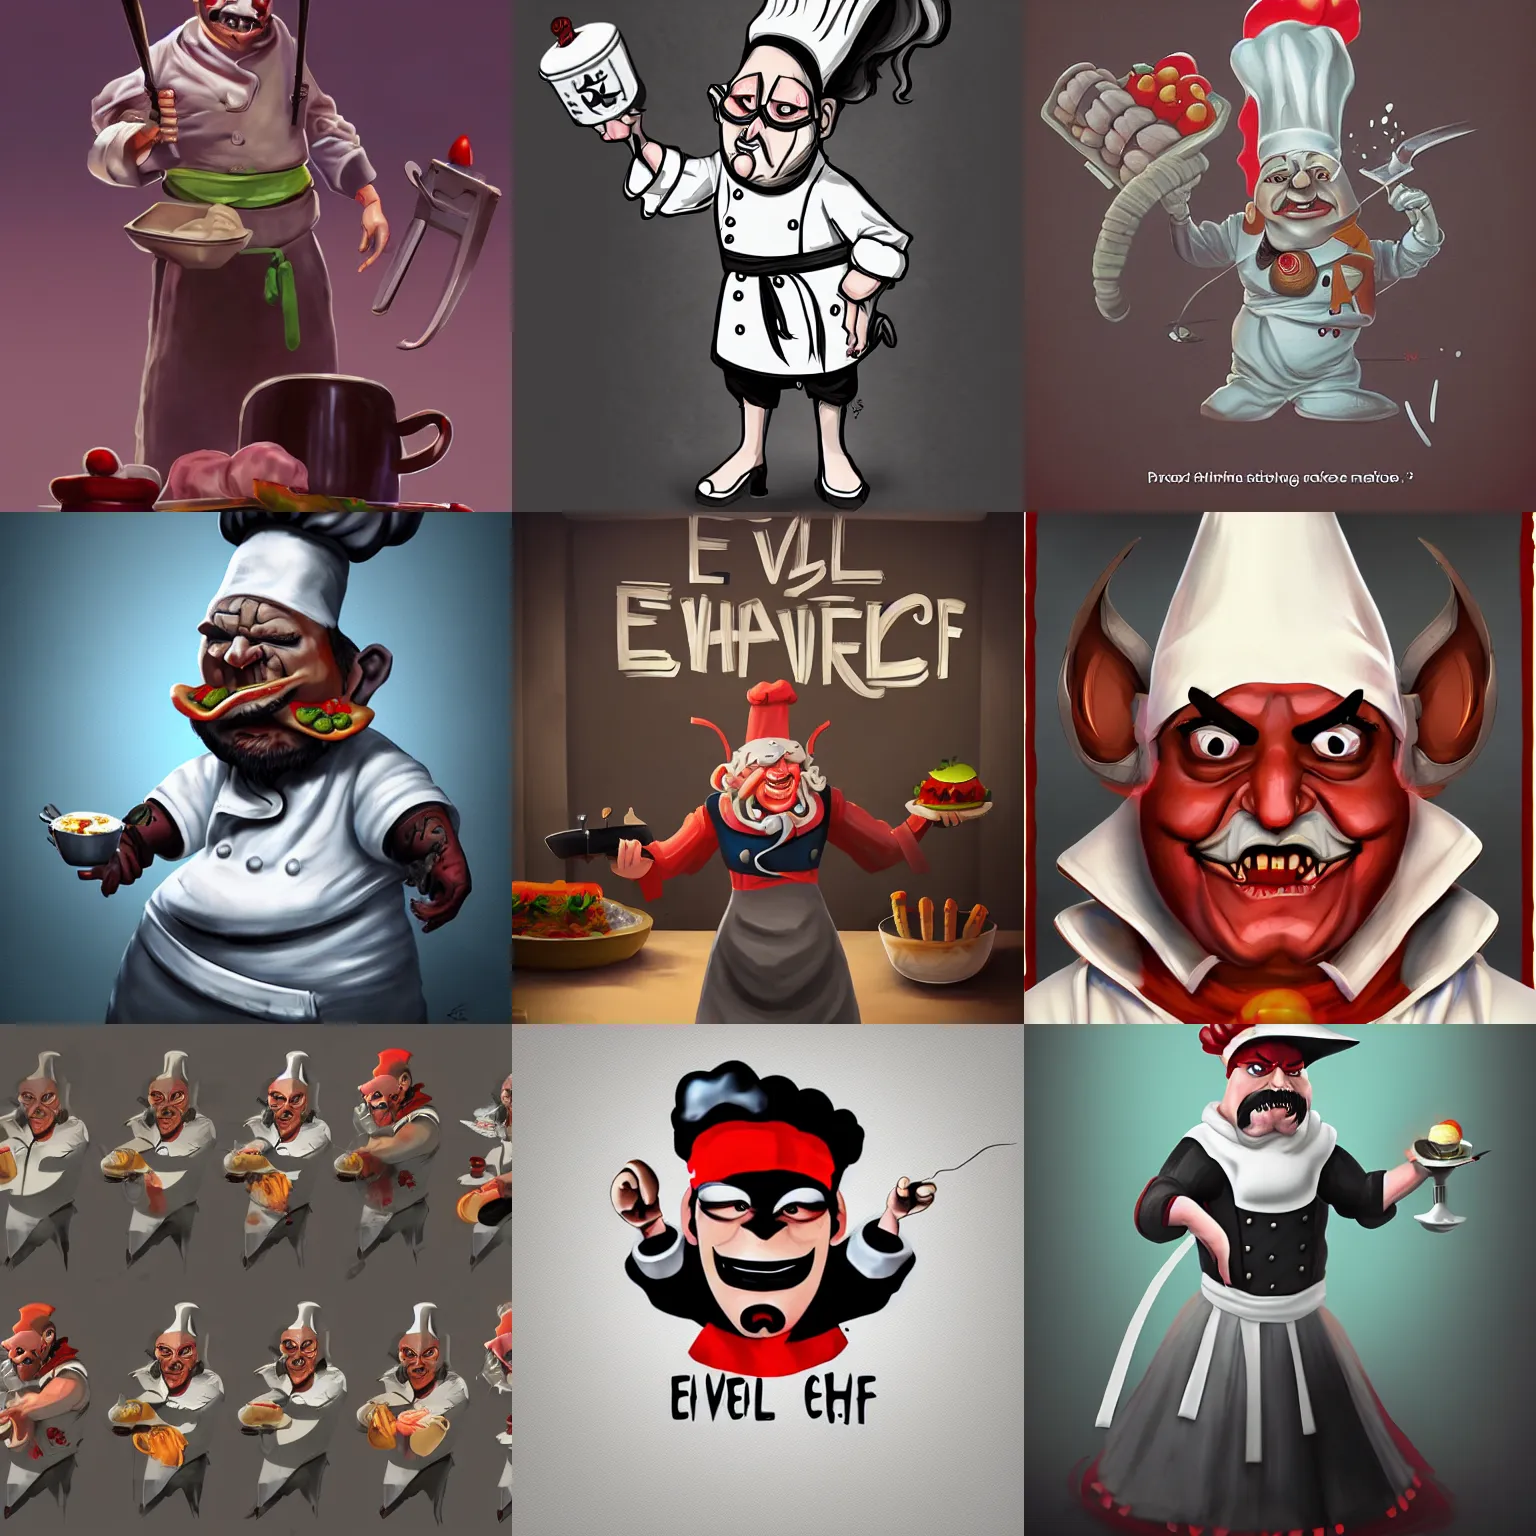 Prompt: evil chef, artstation concept art